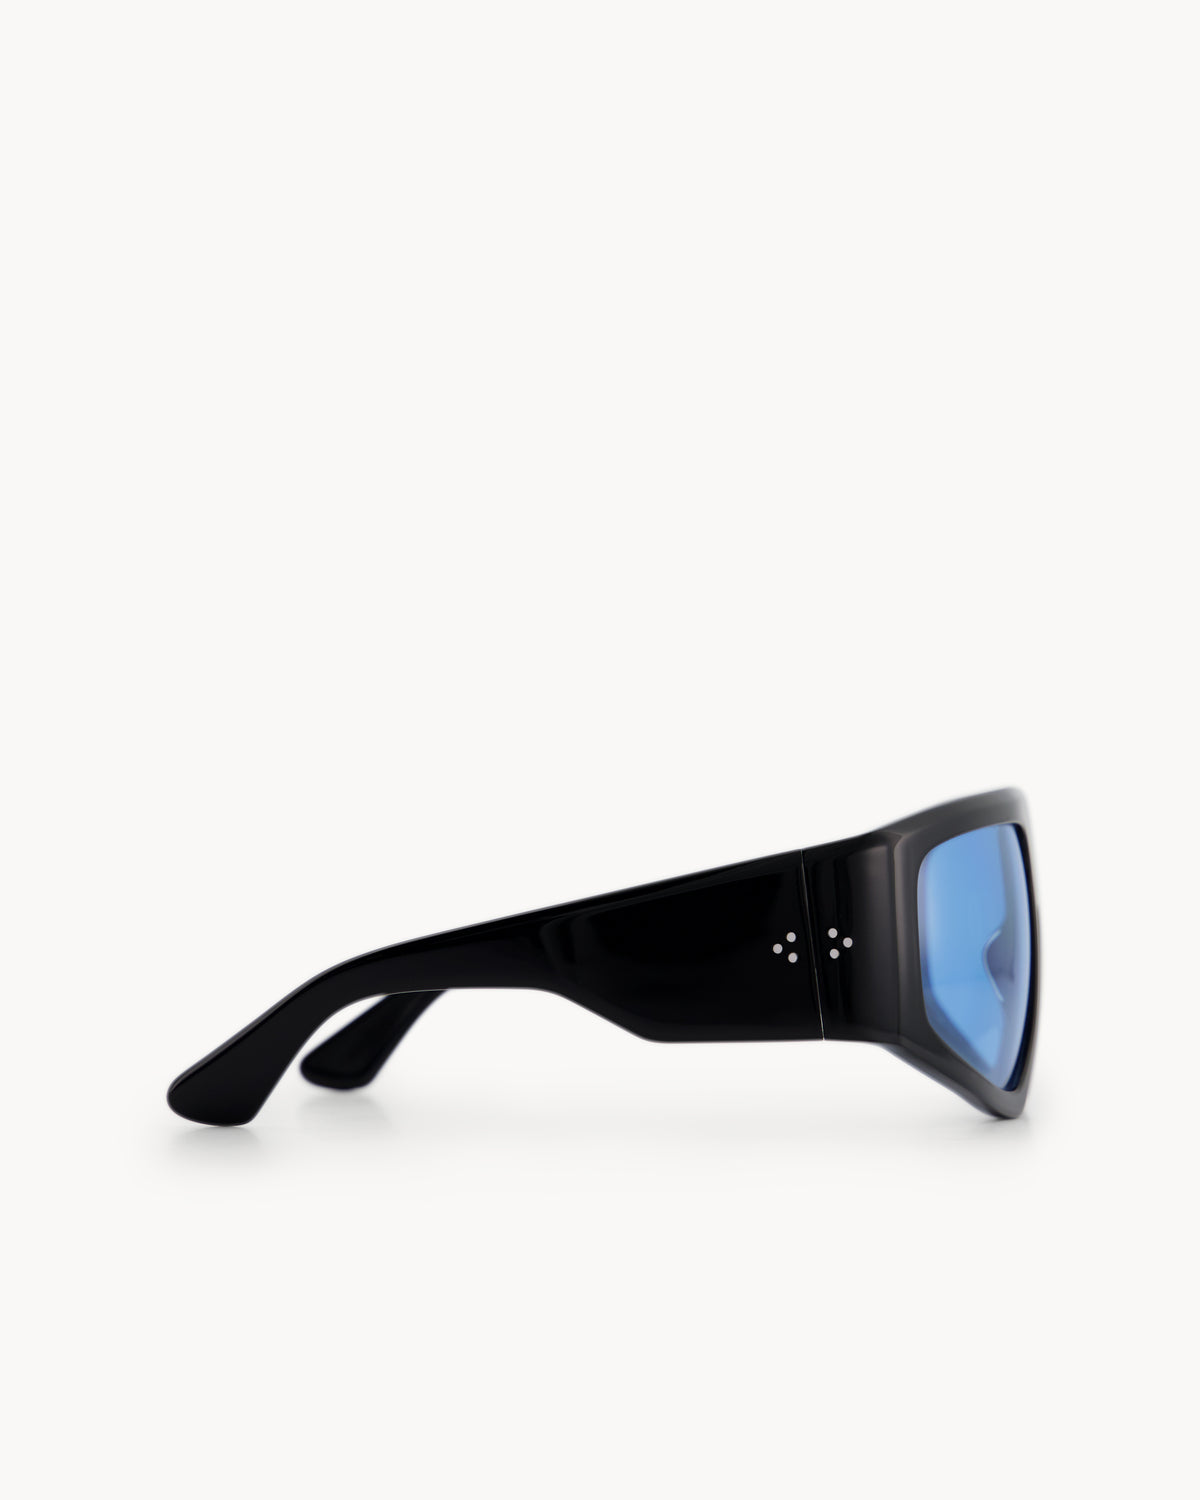 Port Tanger Noor Sunglasses in Black Acetate and Rif Blue Lenses 4